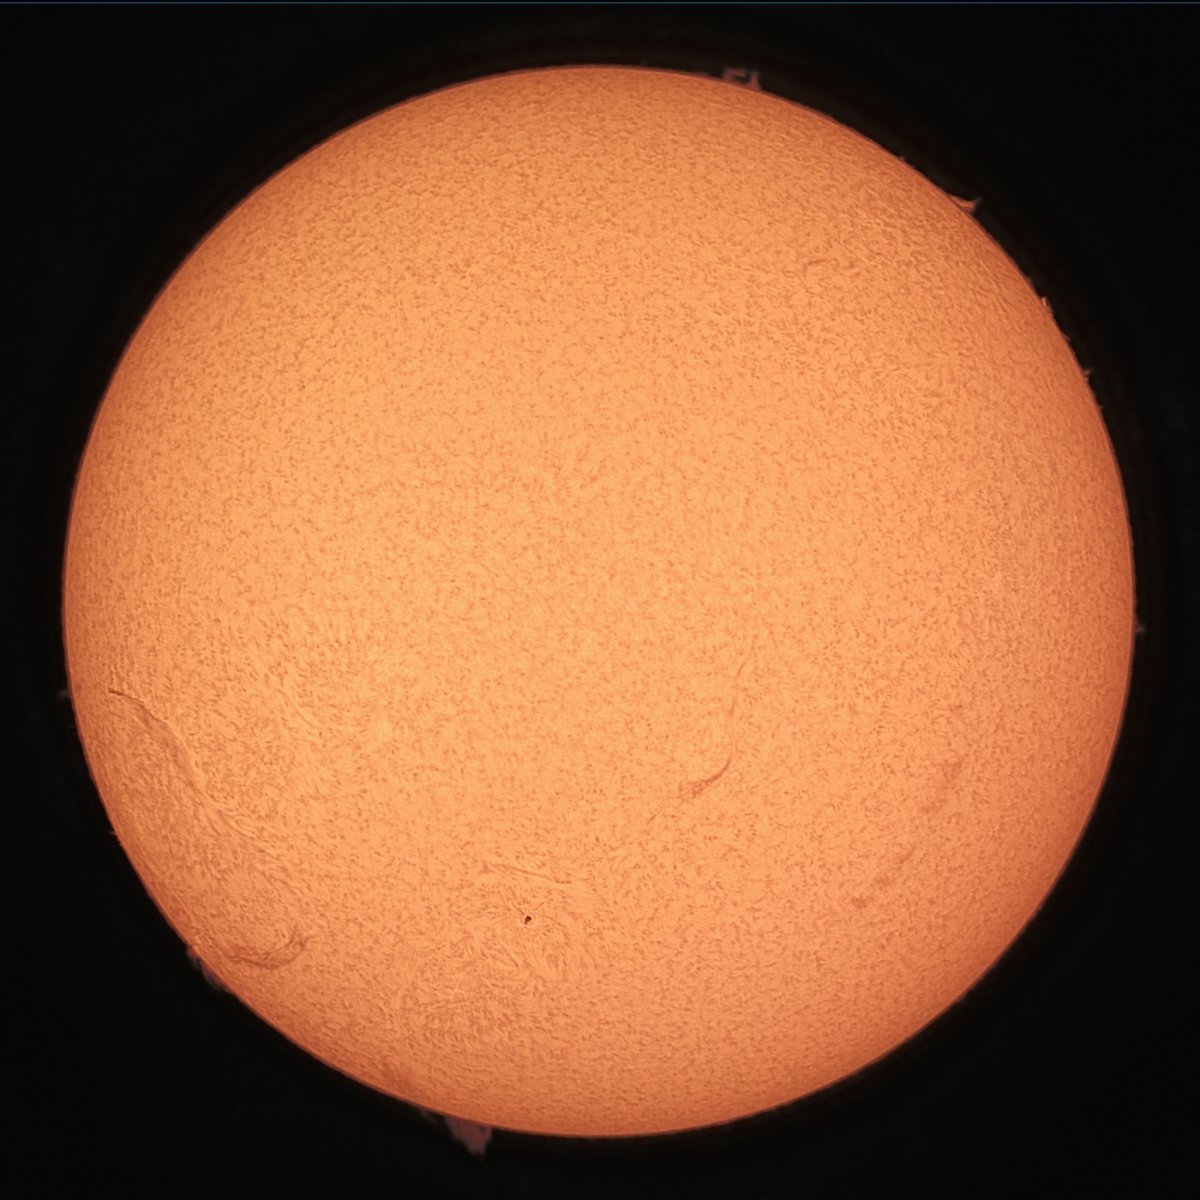 Sun March 20 2015